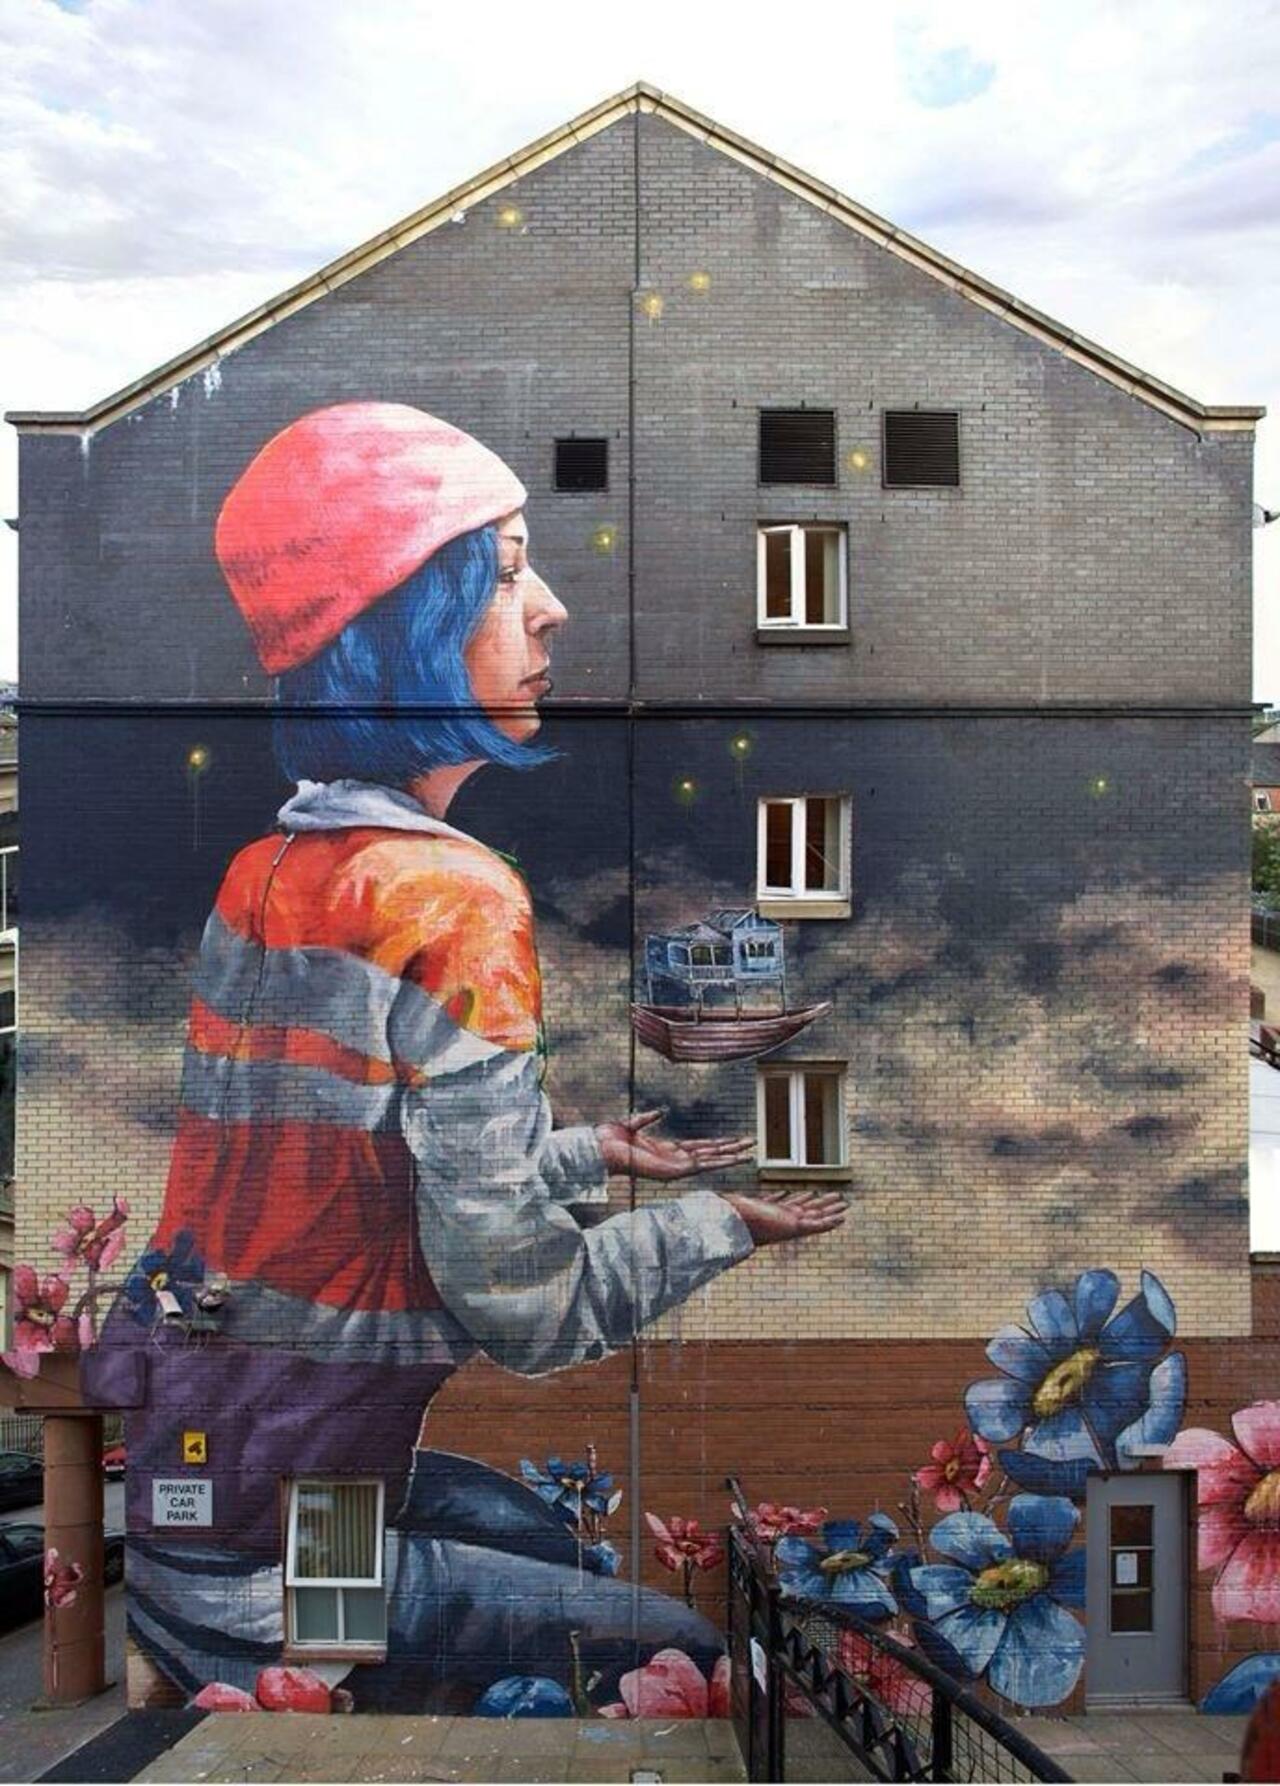 RT @designopinion: Artist Fintan McGee new wonderful Street Art mural in Glasgow, Scotland #art #mural #graffiti #streetart https://t.co/Vh0JYkqLRC